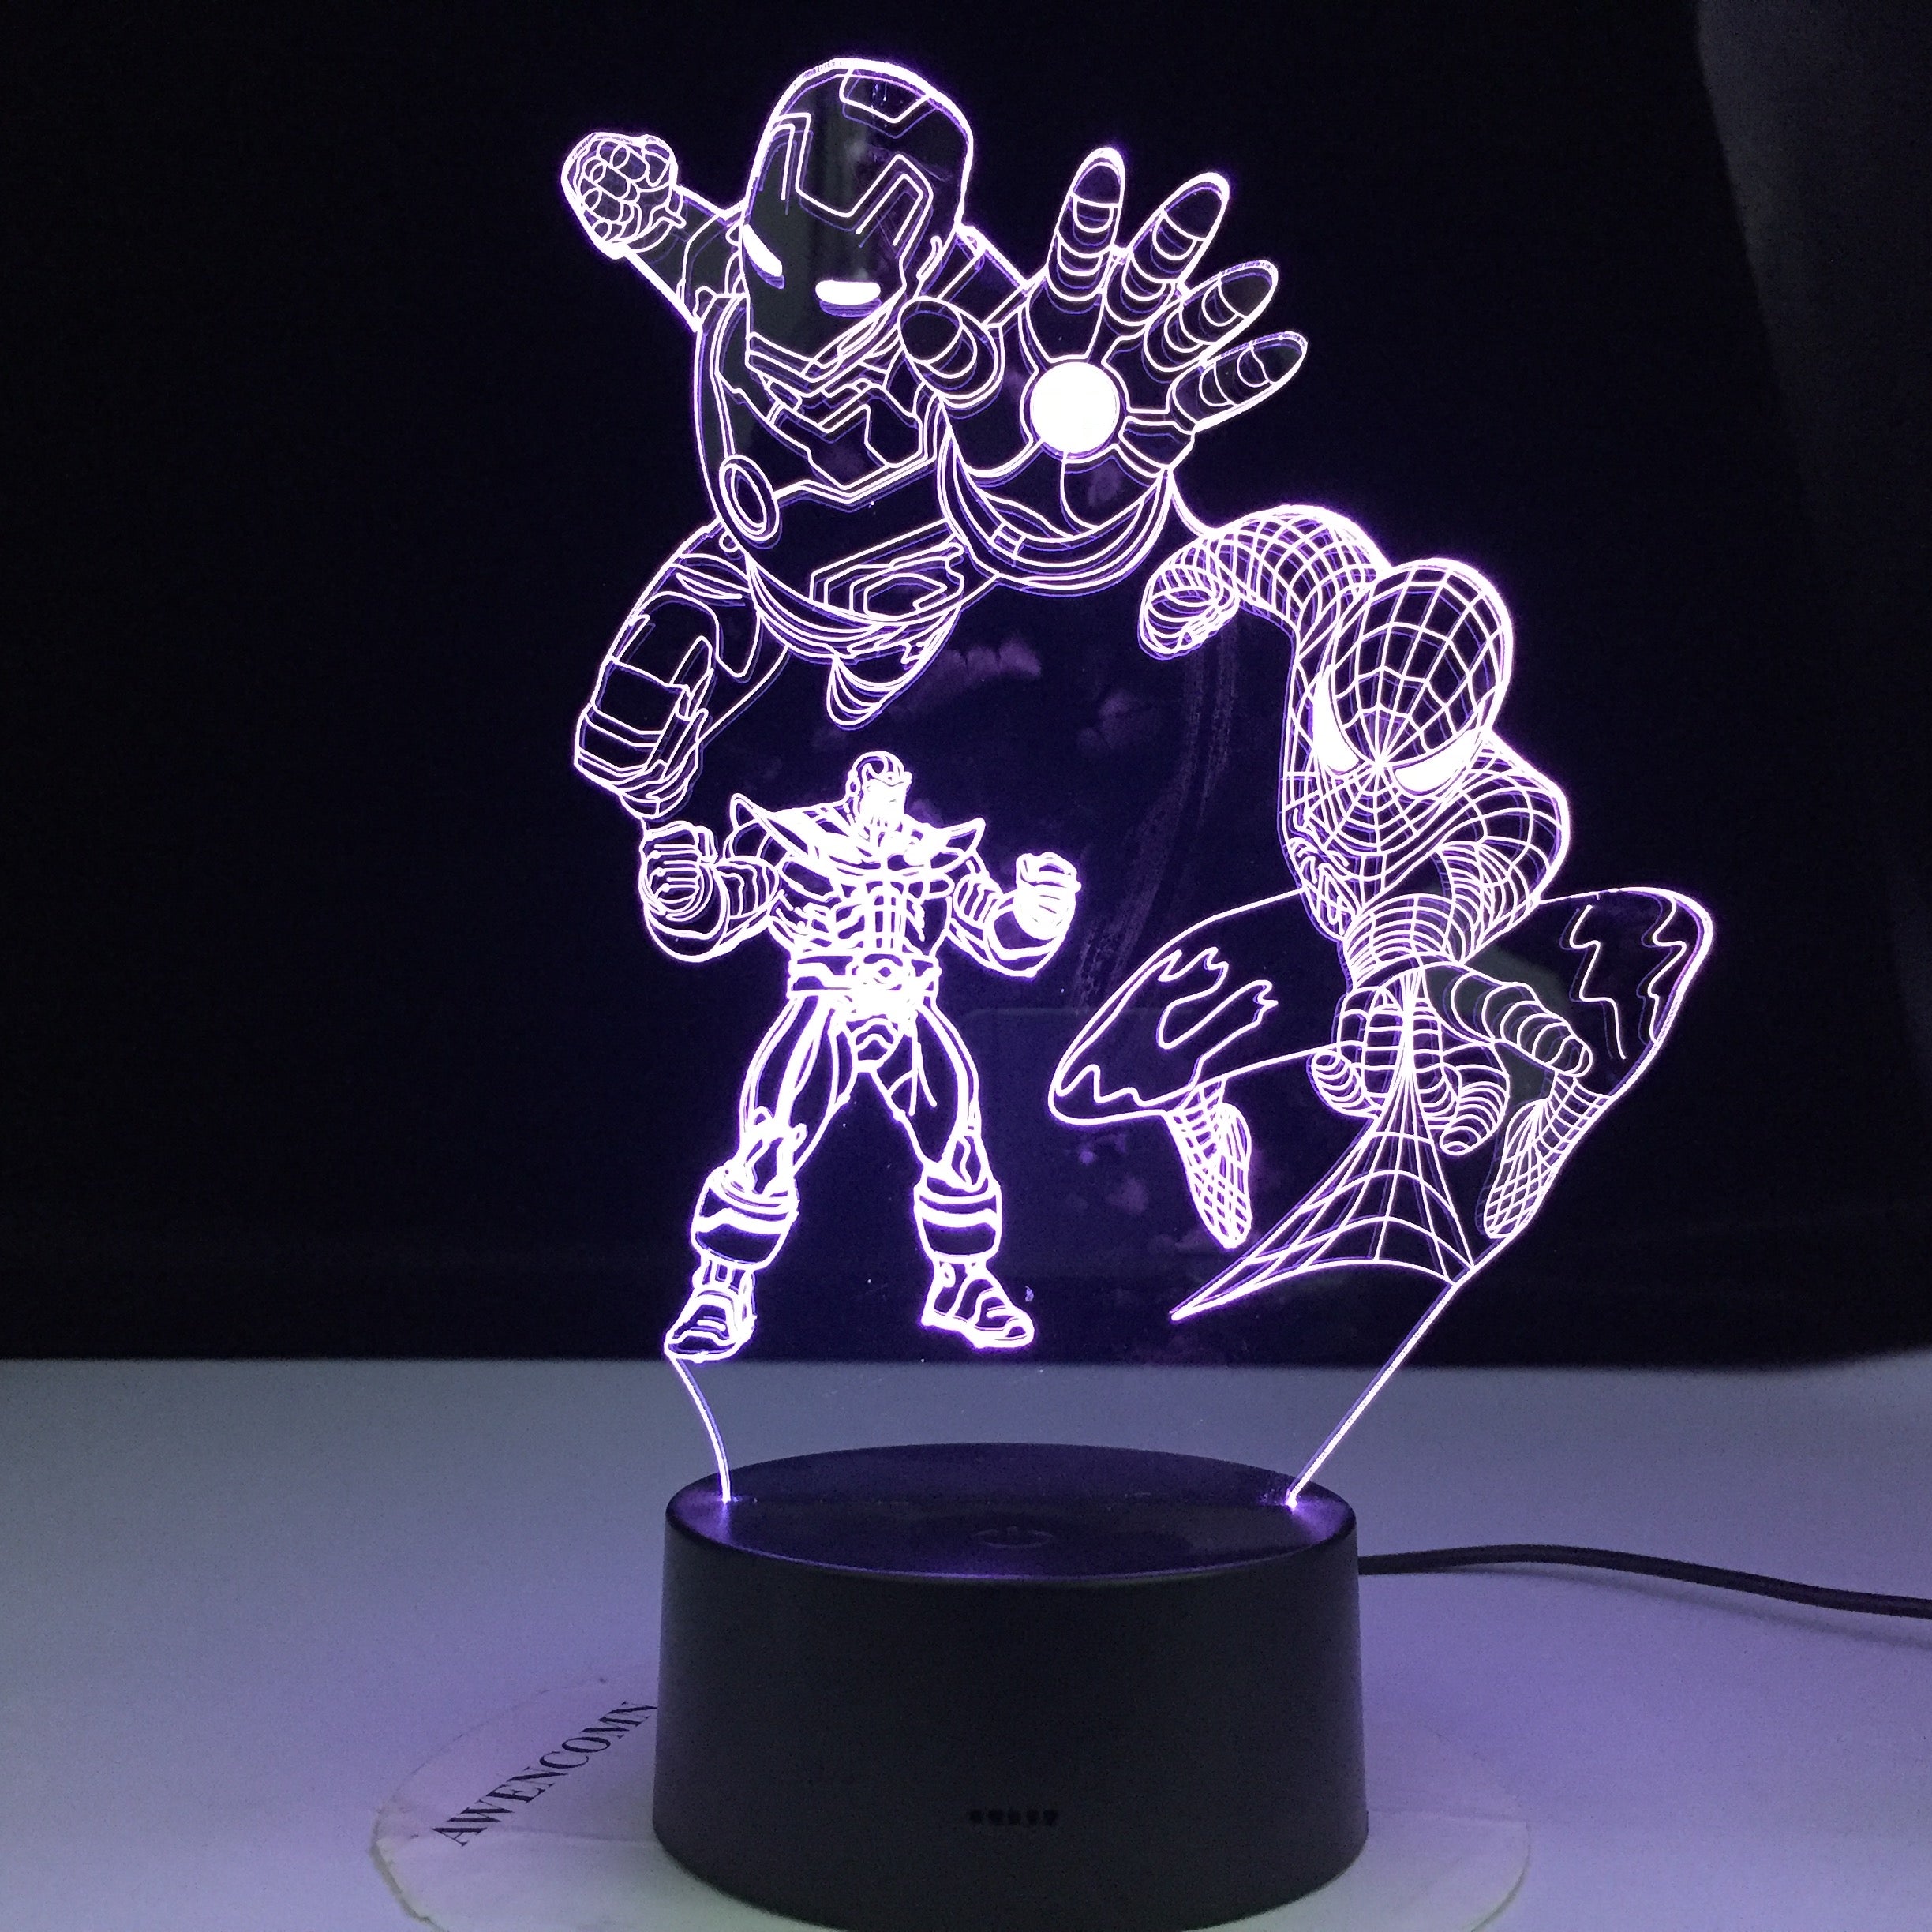 MARVEL - Lampe Decorative 3D - SPIDERMAN : : Lampe